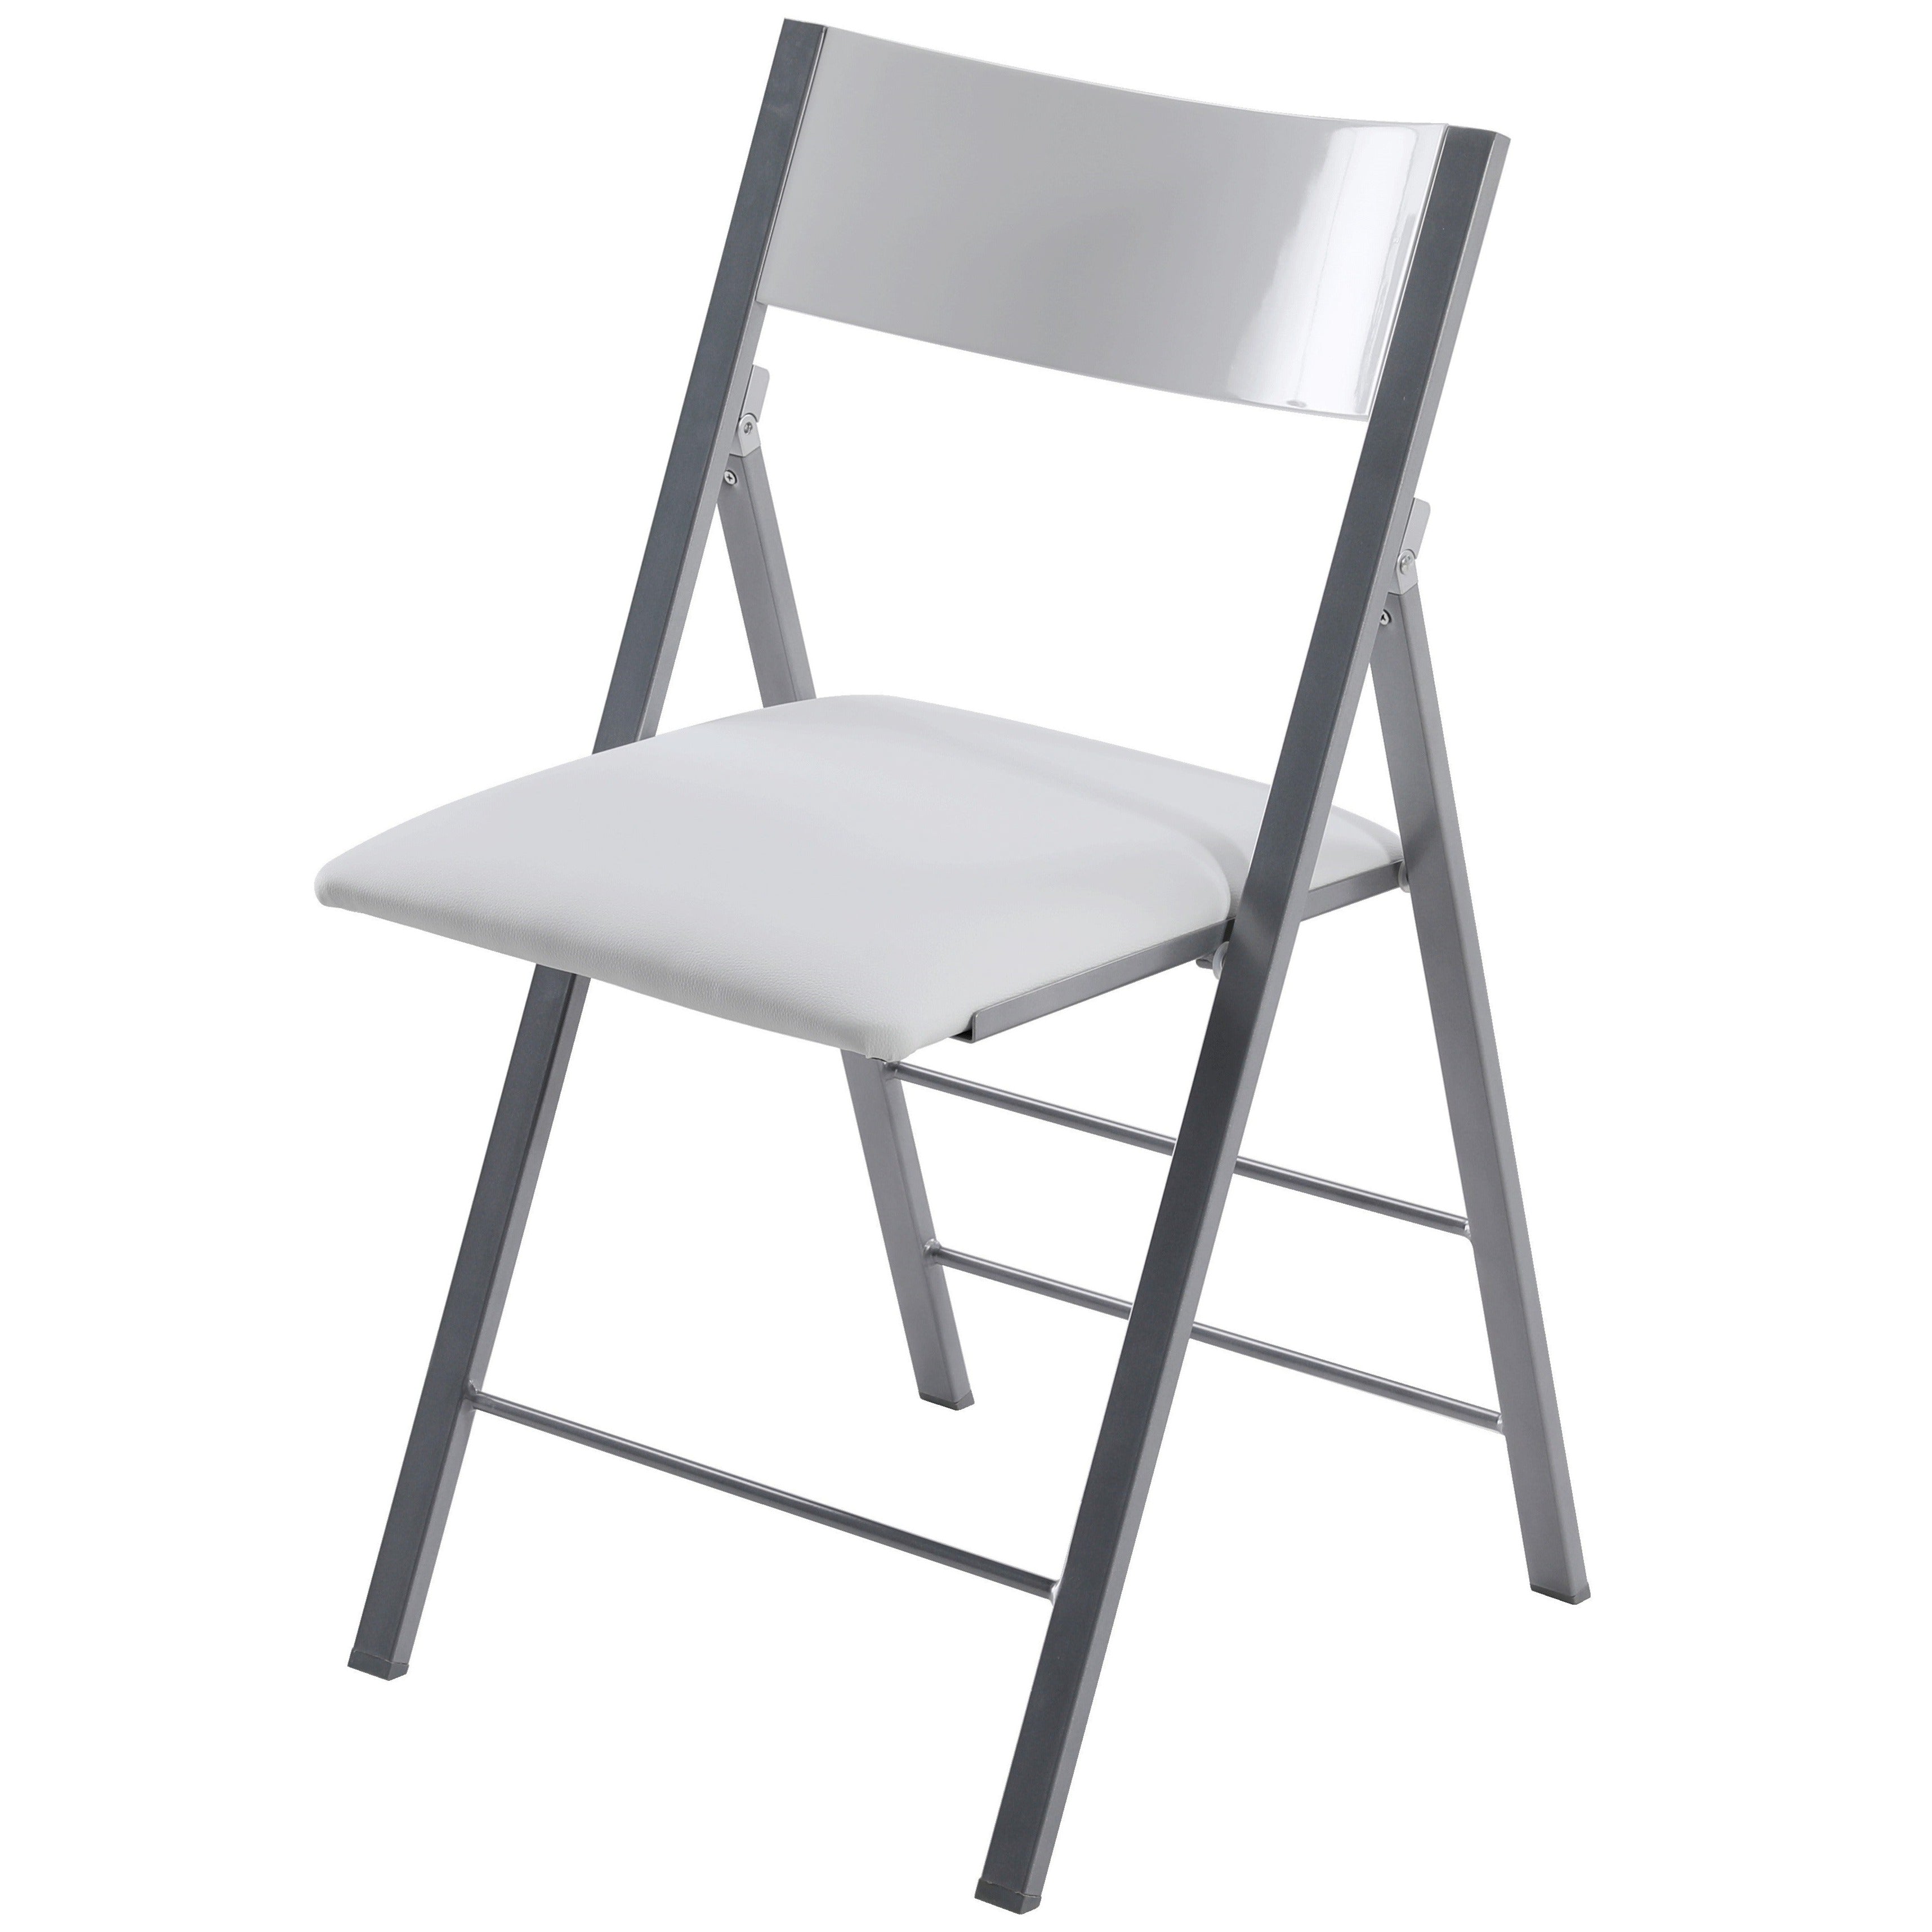 Foldees Chicago model folding chair, silver metal frame, white PU leather padded seat, white wood rounded backrest,  designer folding chair כסא מתקפל מעוצב מסגרת צבע כסף ומושב דמוי עור לבן